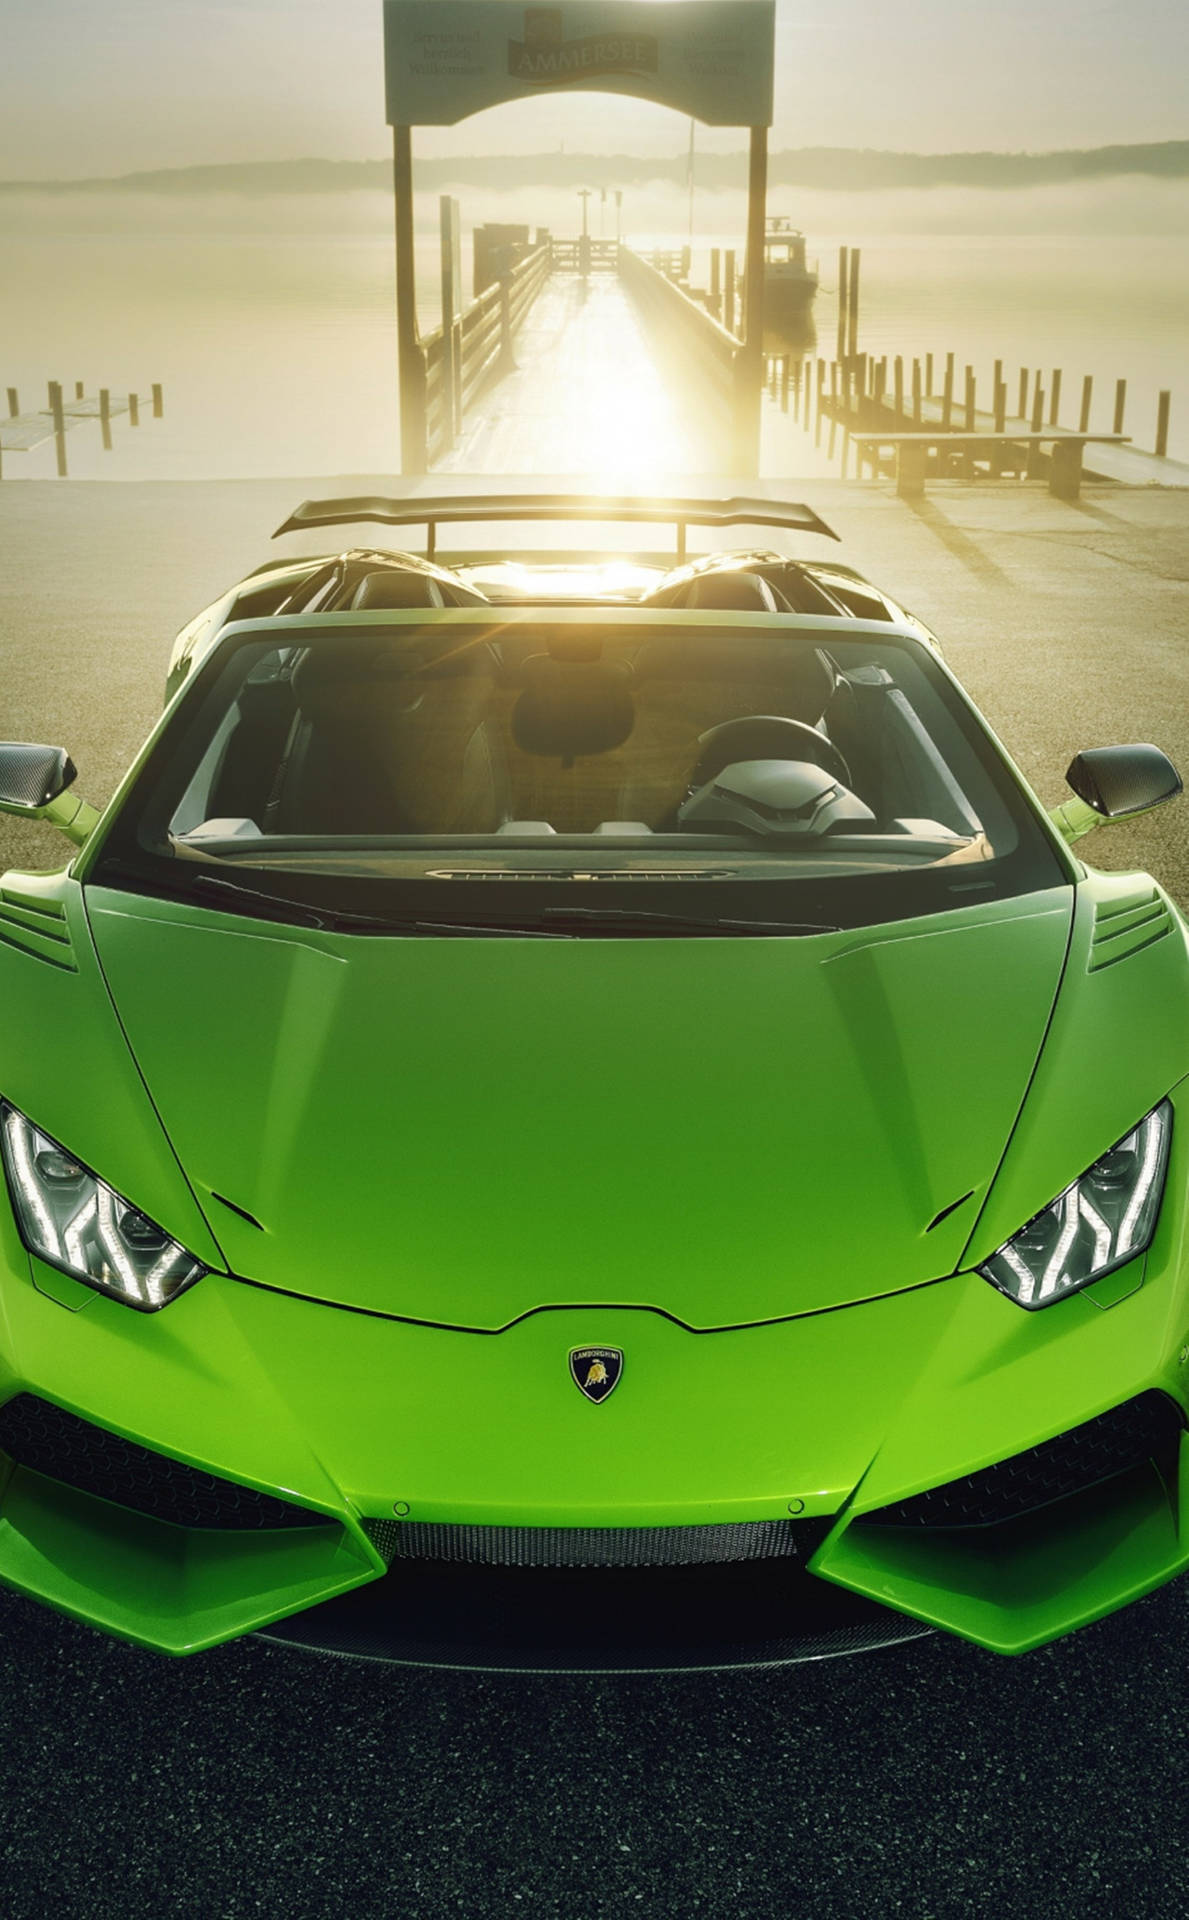 Dieperfekte Kombination: 4k Lamborghini Und Iphone! Wallpaper